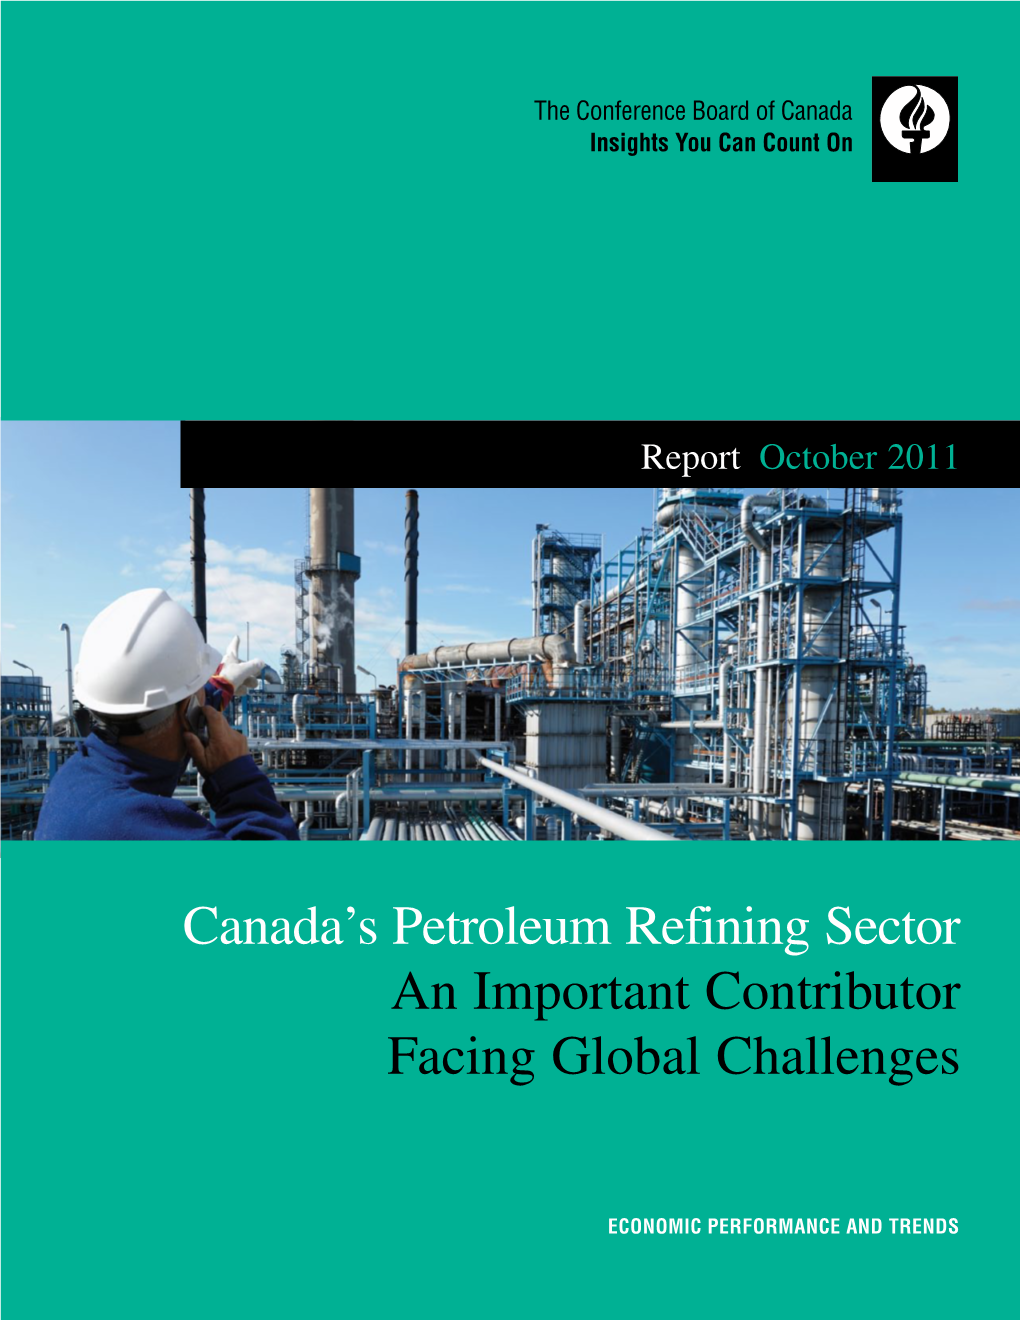 Canada's Petroleum Refining Sector: an Important Contributor Facing